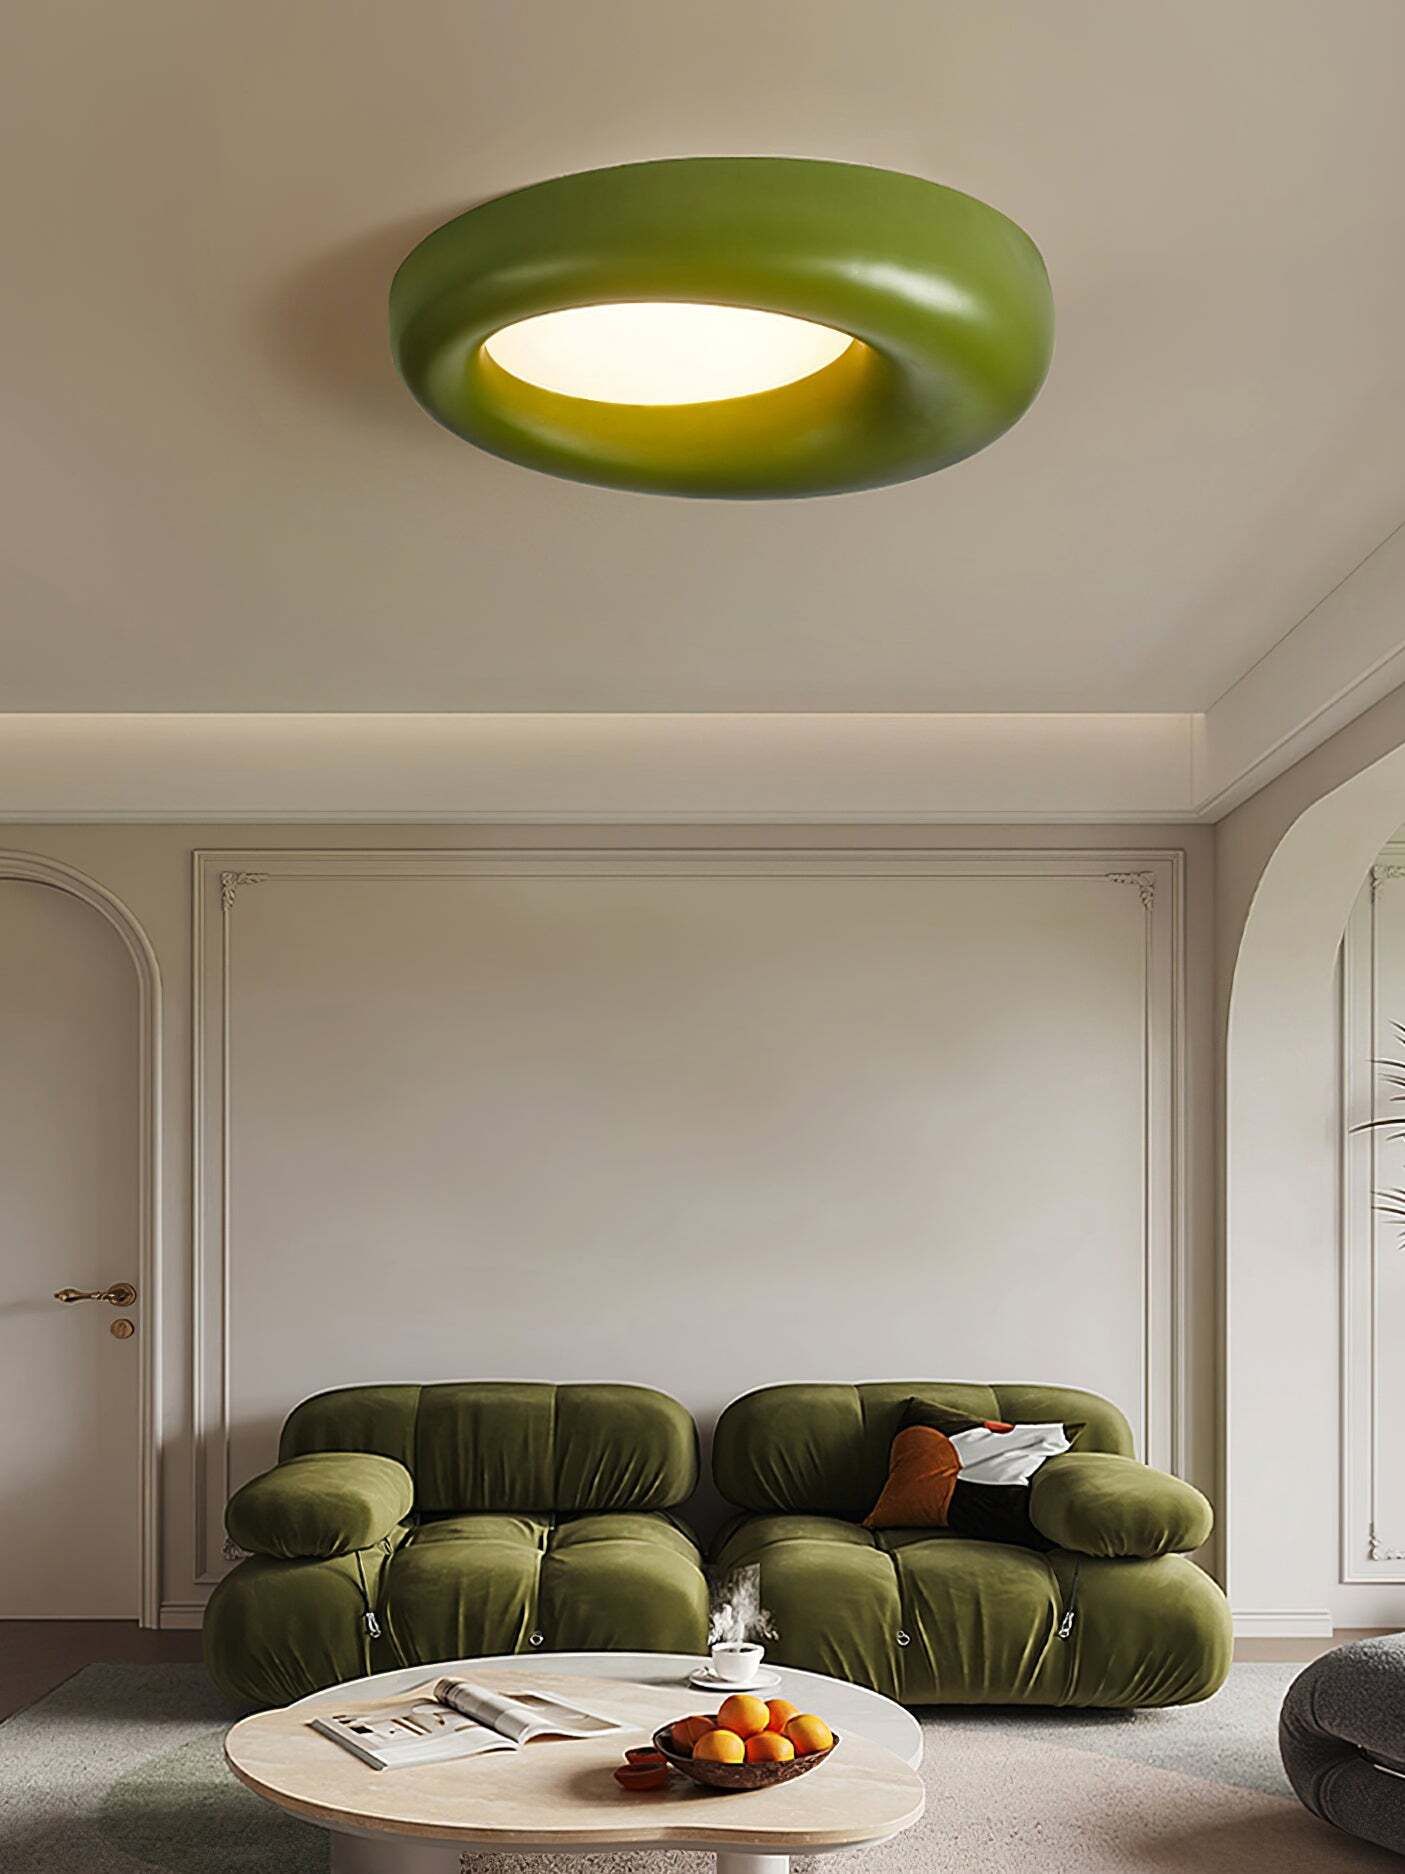 Ceiling Lamp Lighting : Illuminate Your Space with Stylish Ceiling Lamp Lighting Options